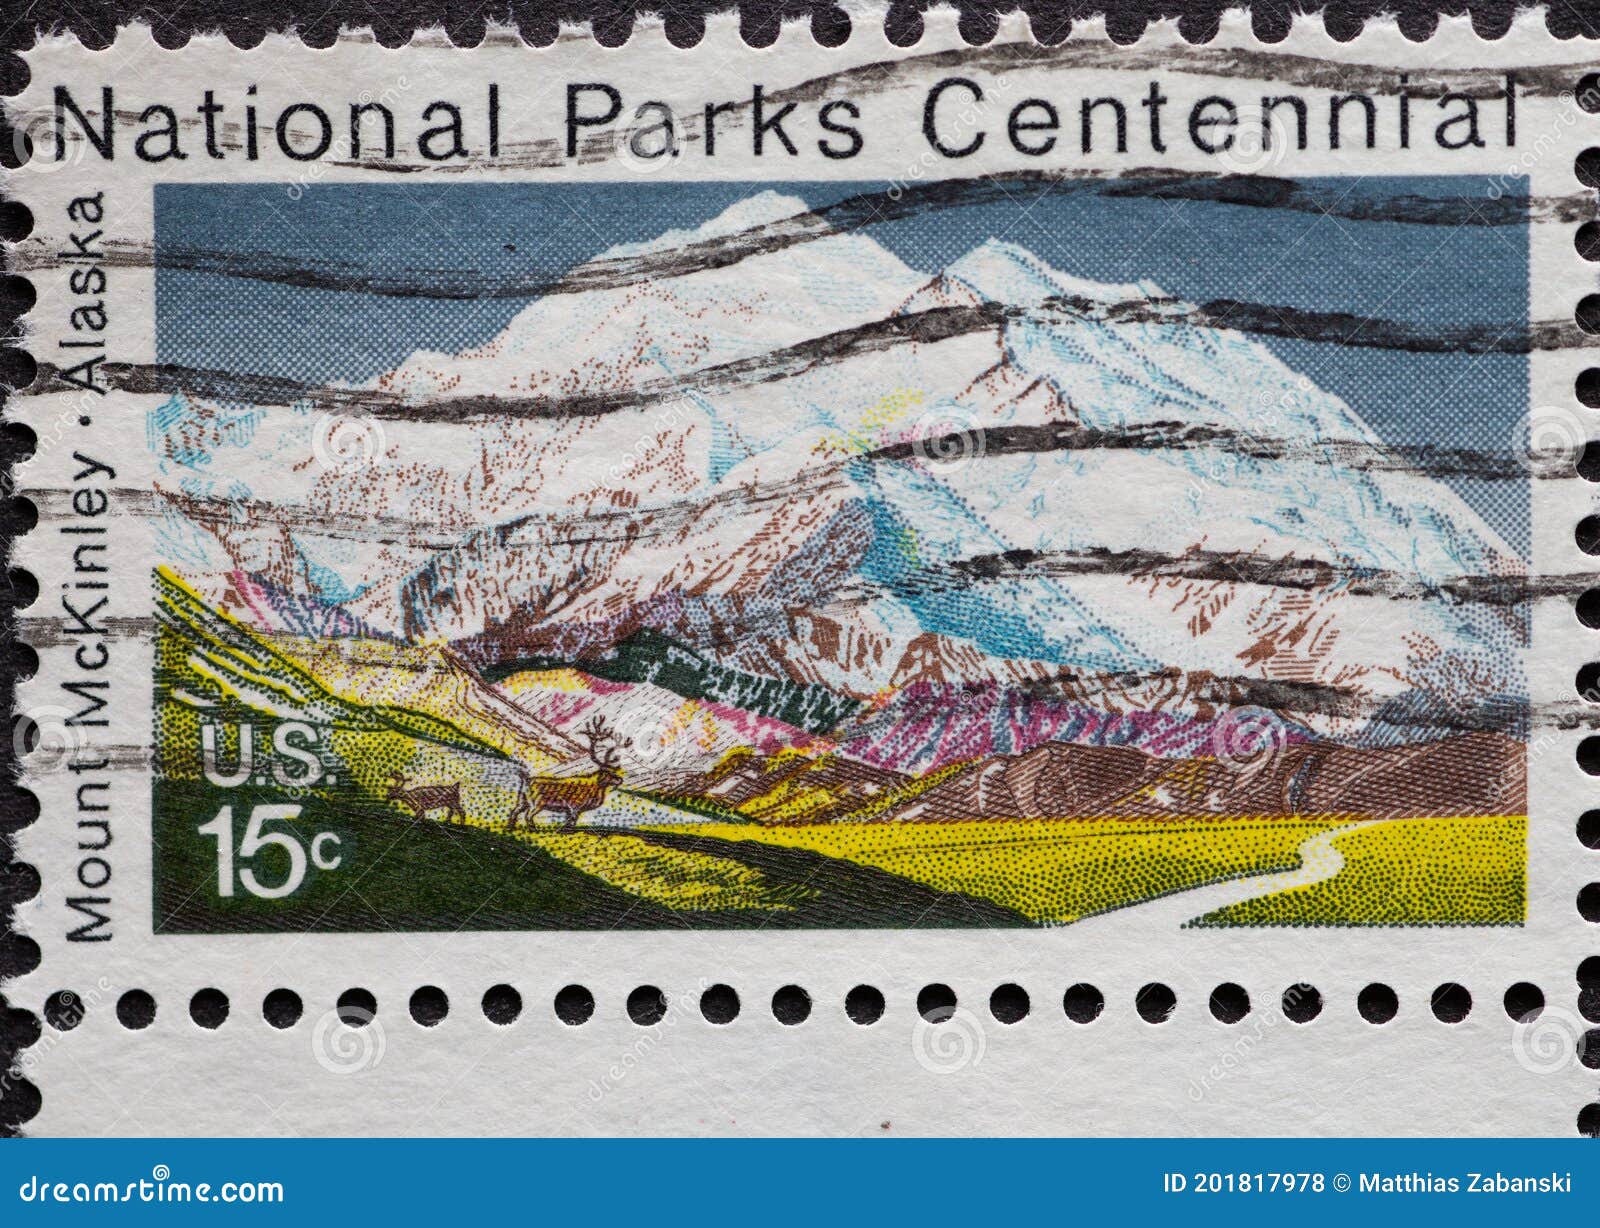 Mt McKINLEY NATIONAL PARK Alaska Sheet of 20 Scenic Usa Landscapes Stamps- Unused Fresh Bright Vintage 2009 Stock# C137- Free Usa Ship